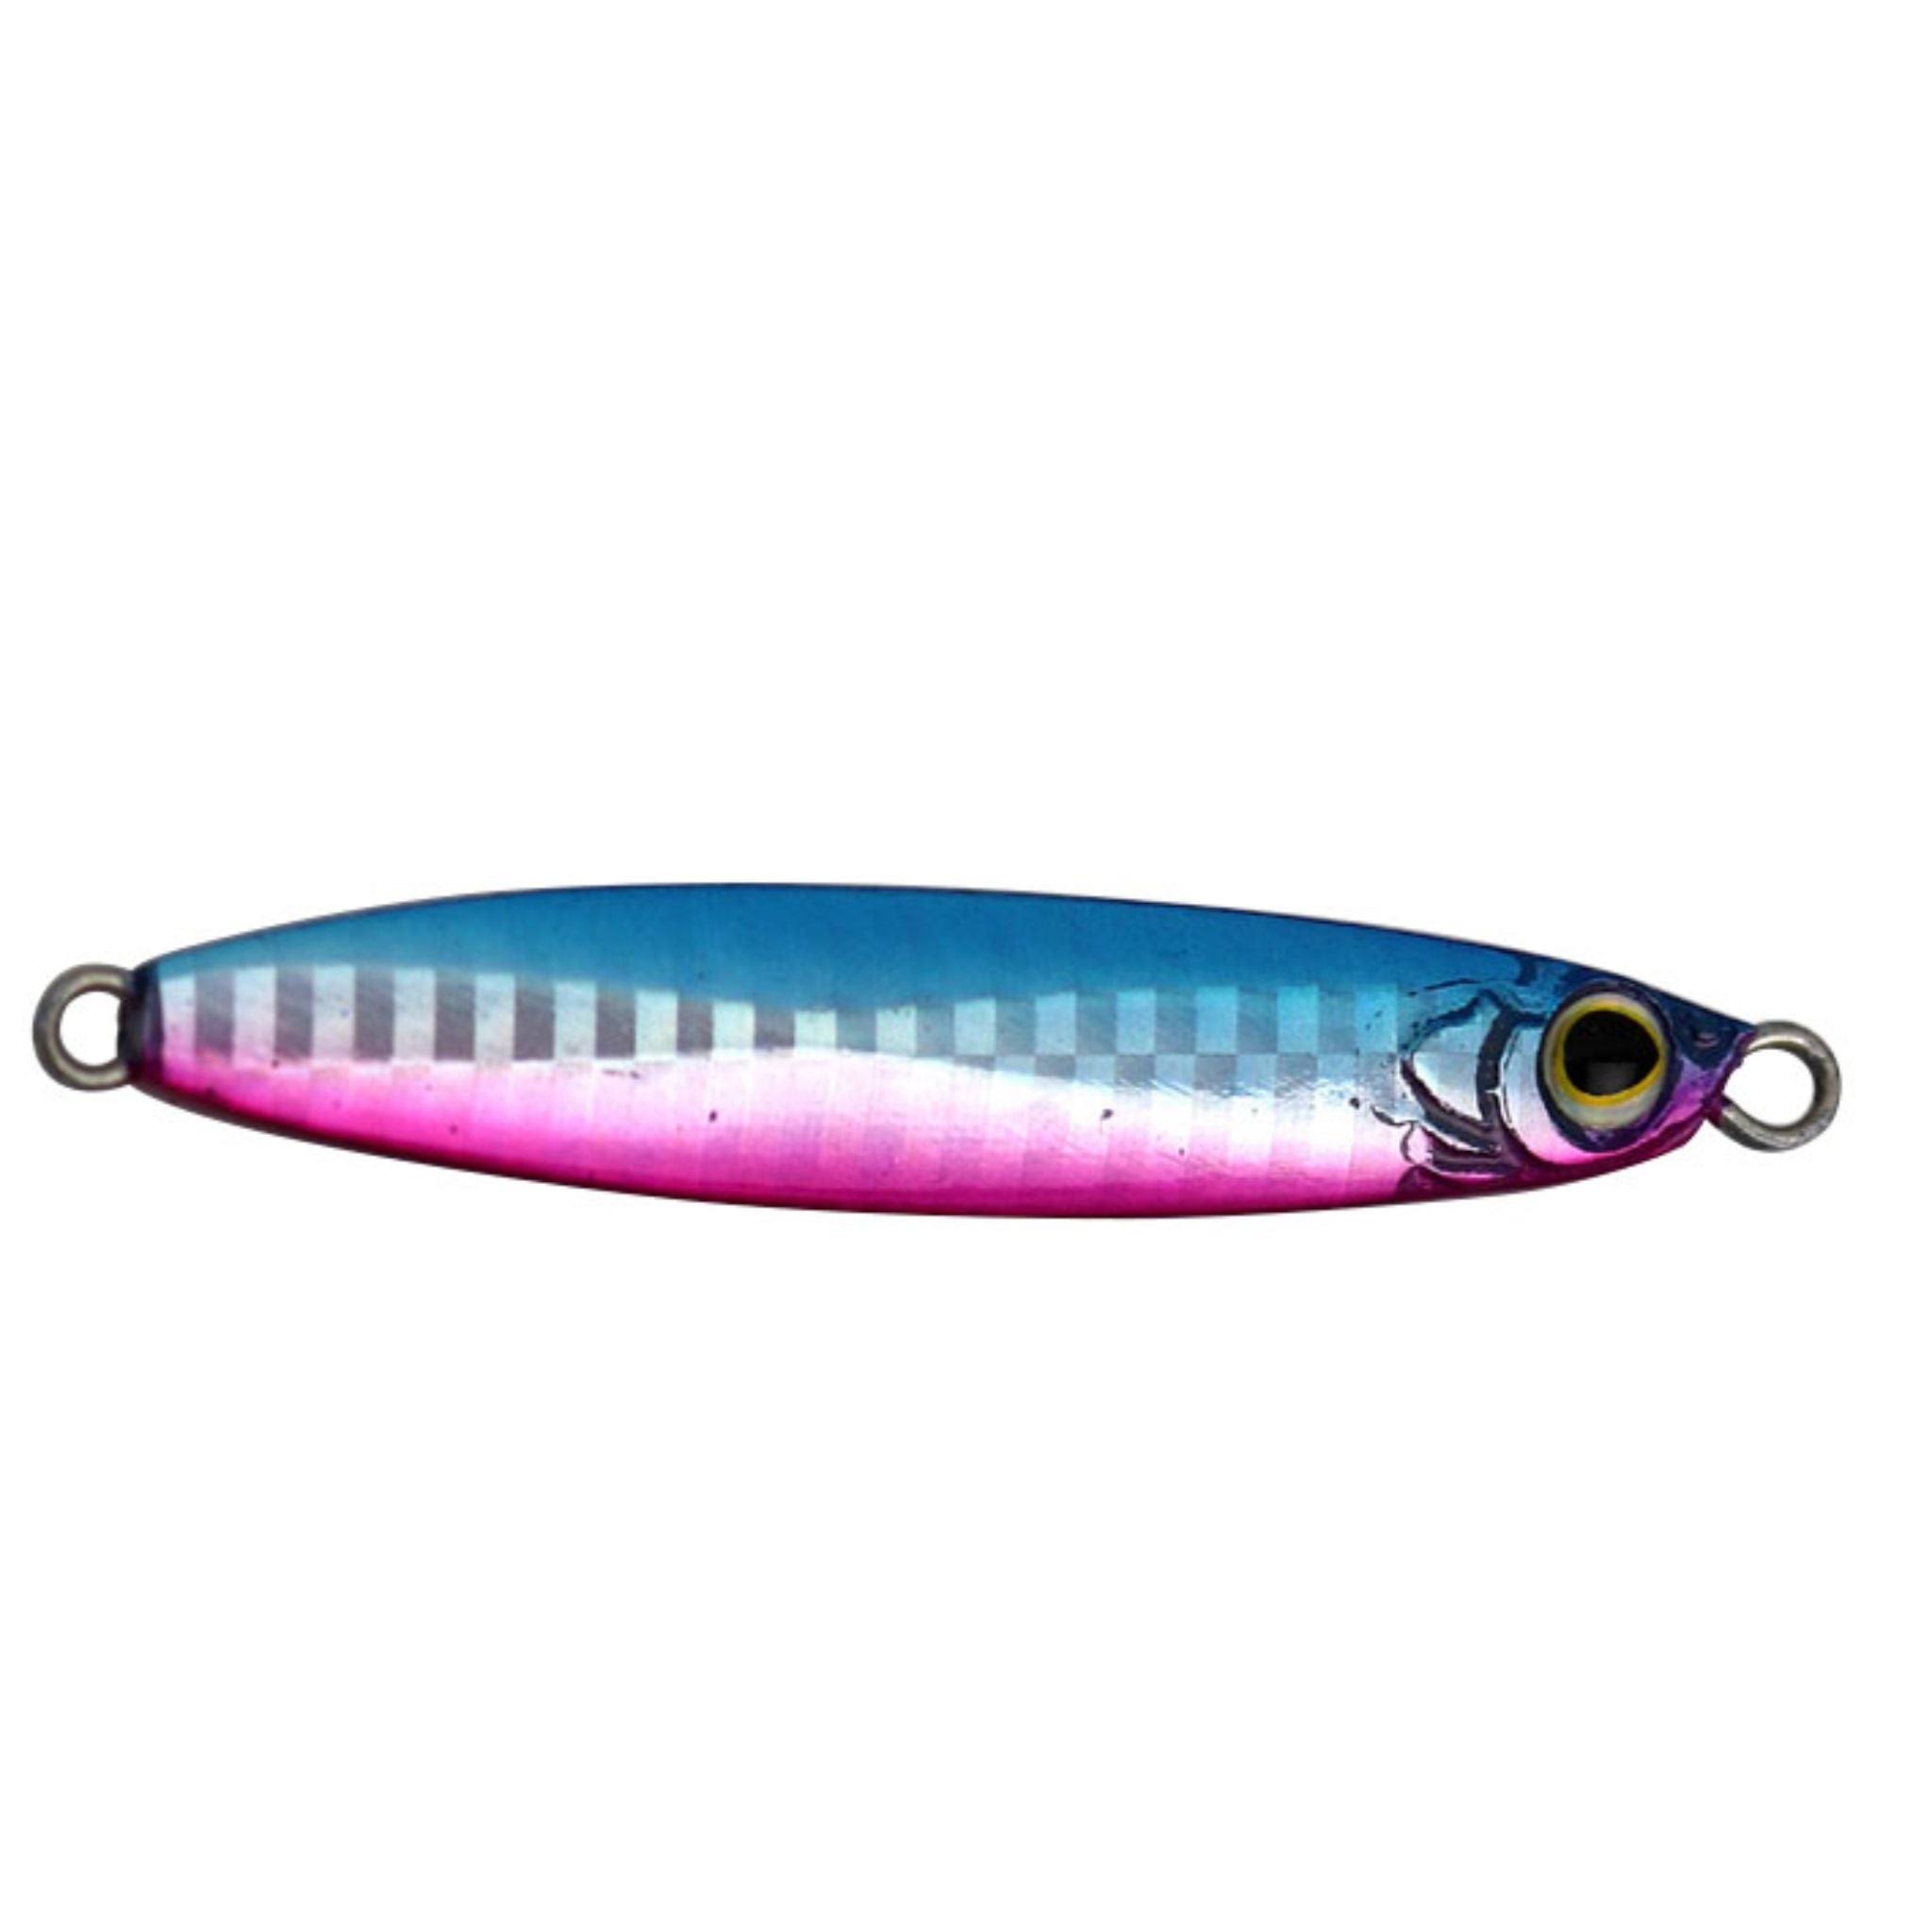 Shimano Fishing Coltsniper Jig - Blue Pink 28g